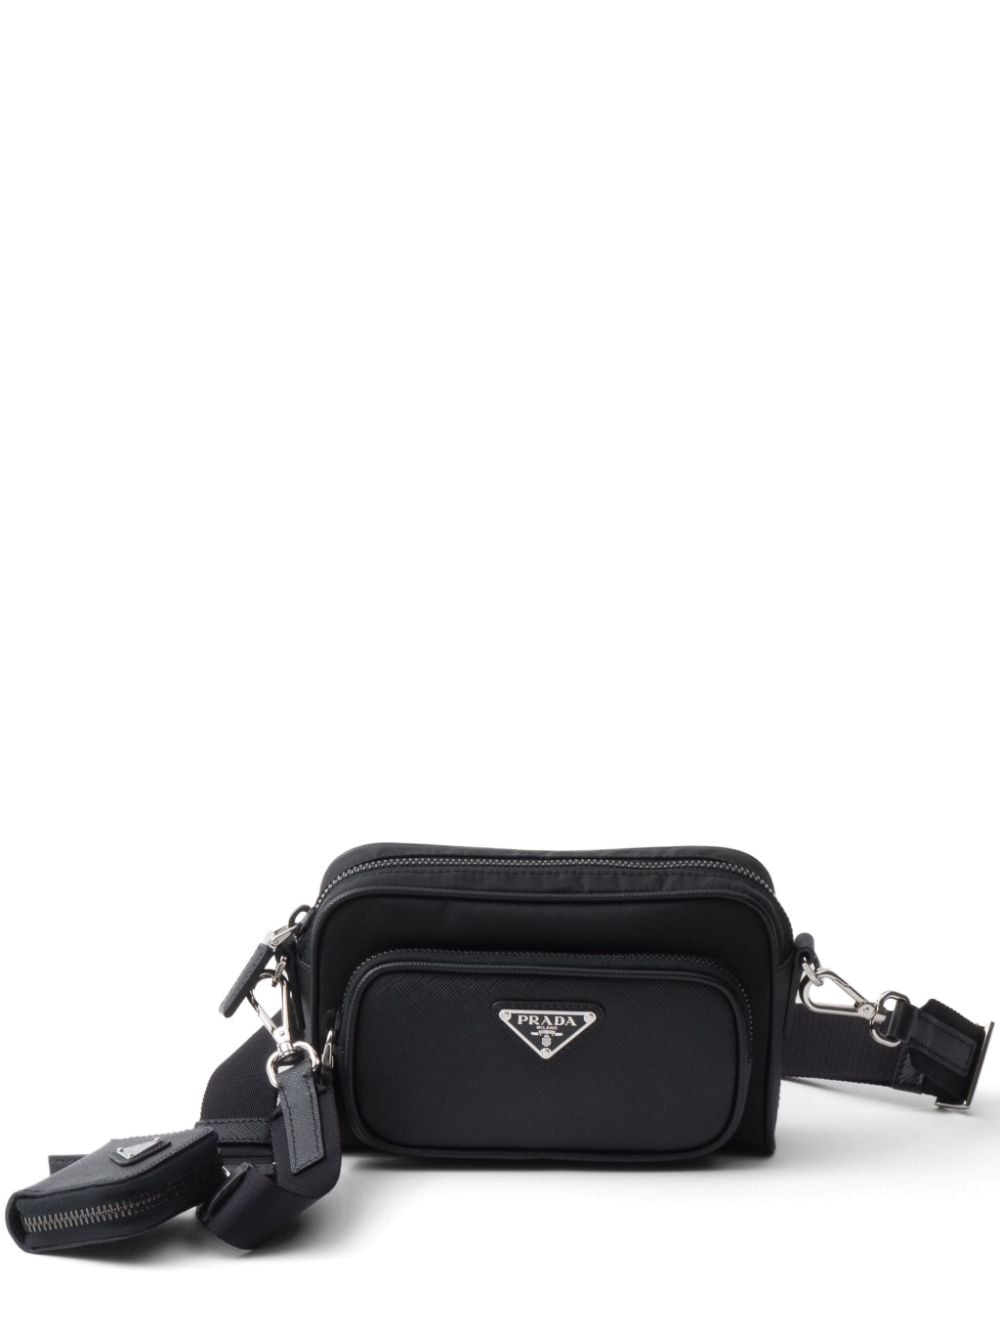 Shop Prada Saffiano Leather Shoulder Bag In Schwarz